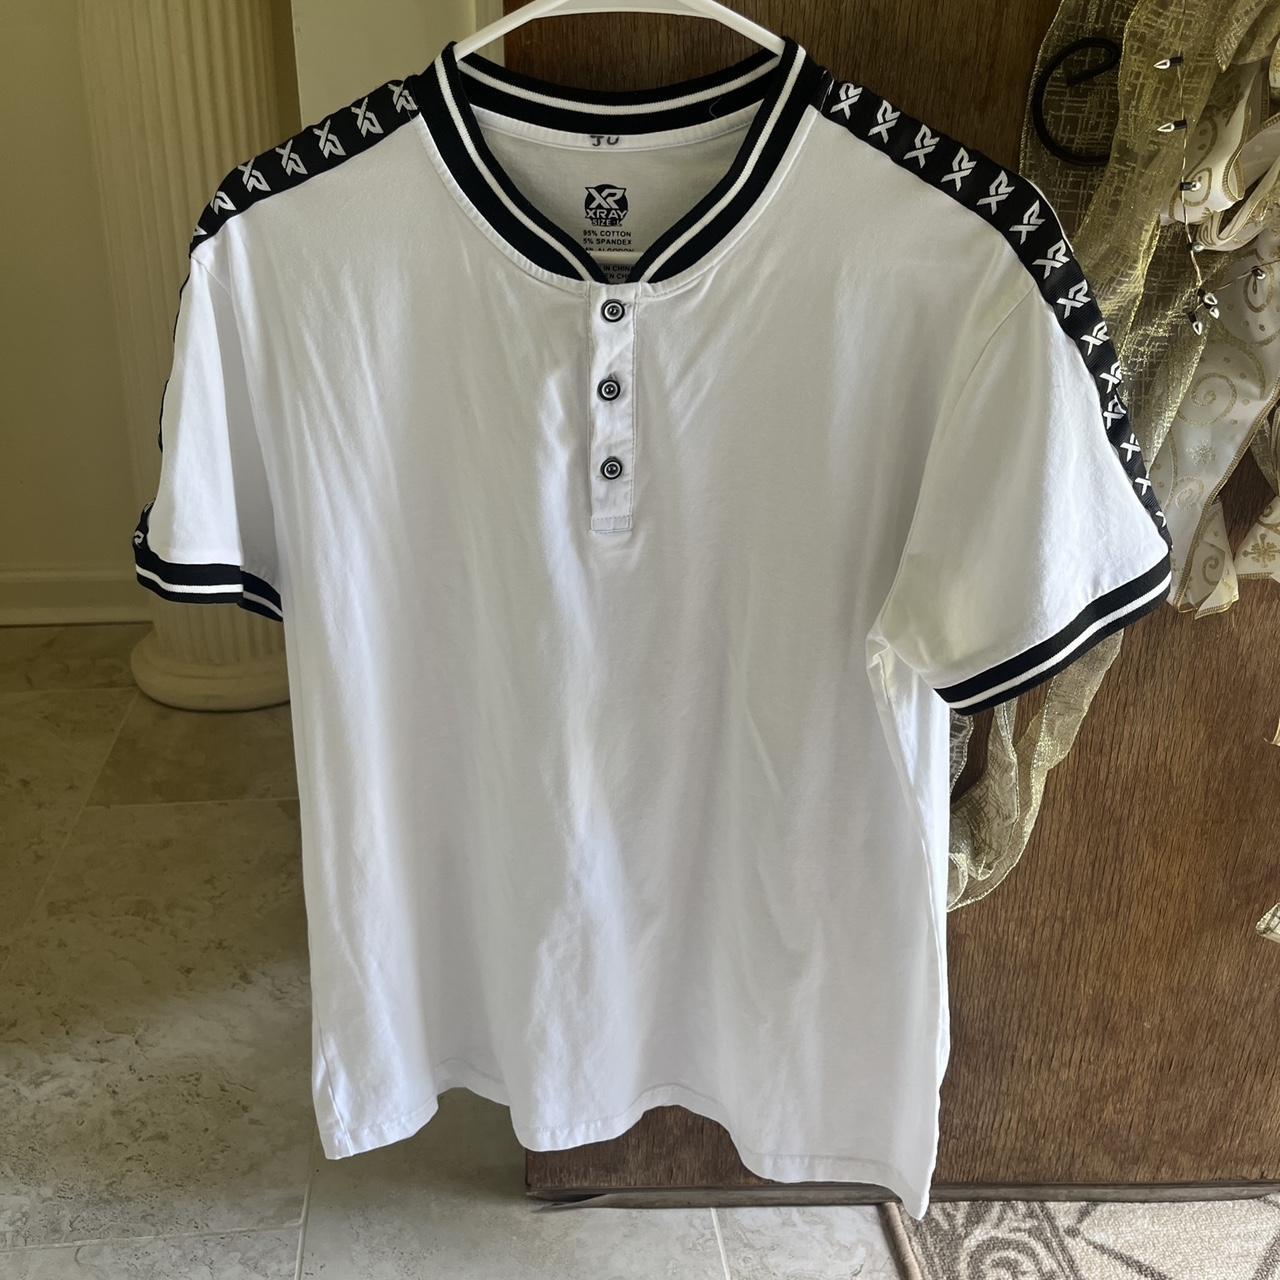 XRAY Polo Shirt (Men's Large - White/Black)... - Depop